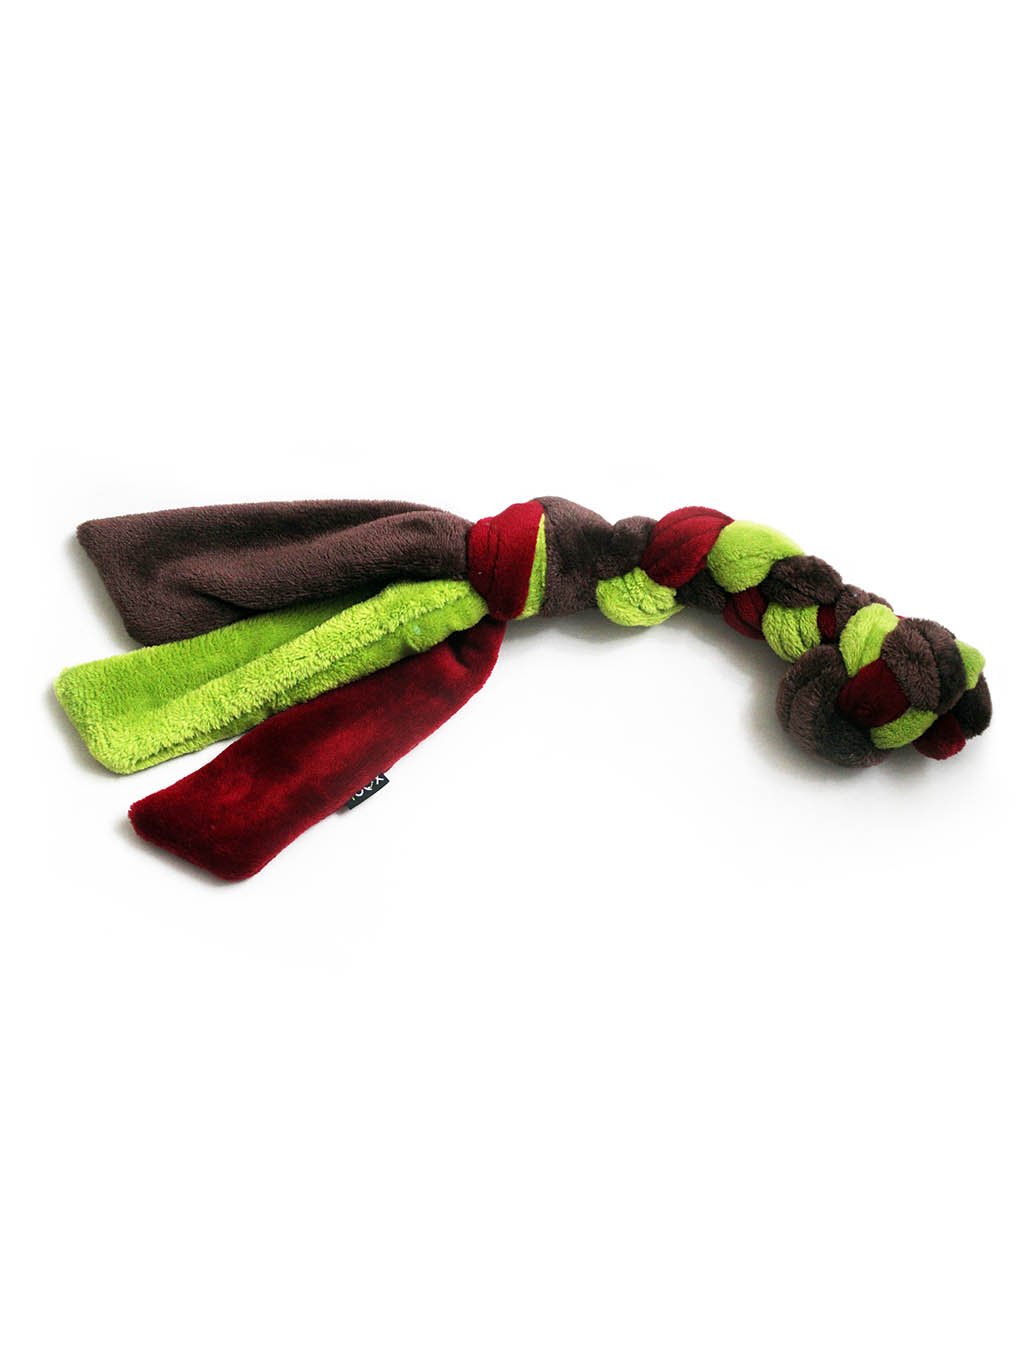 Knitted tug toytug toy - burgundy/lime